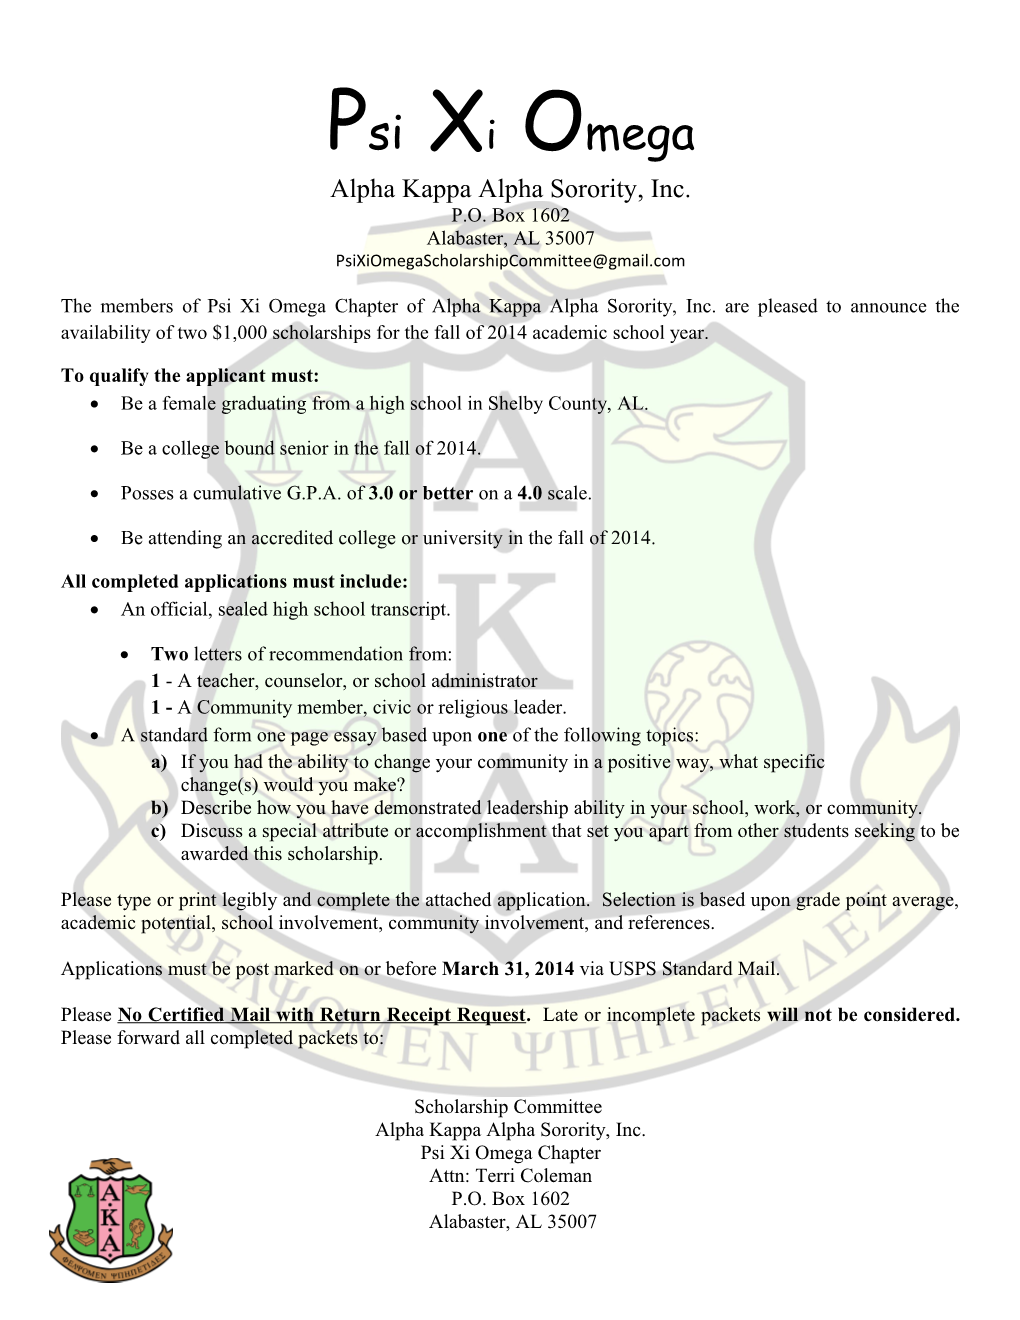 Kappa Alpha Psi Fraternity Inc. Berkeley Alumni Chapter